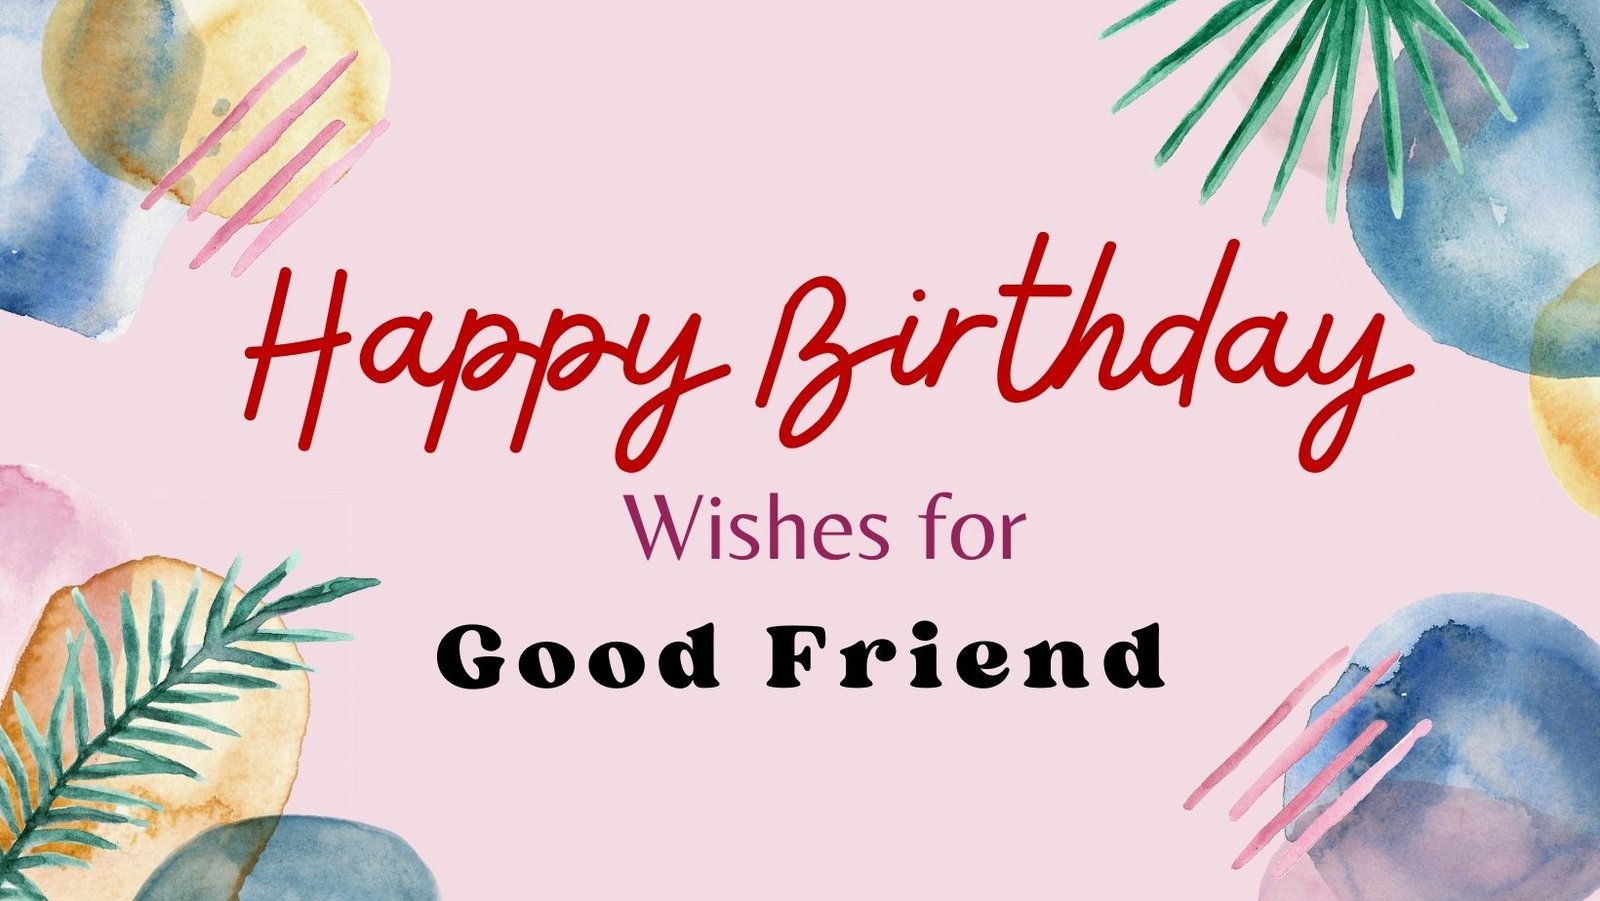 Heartfelt Birthday Wishes for a Good Friend: Joyful Journey Together